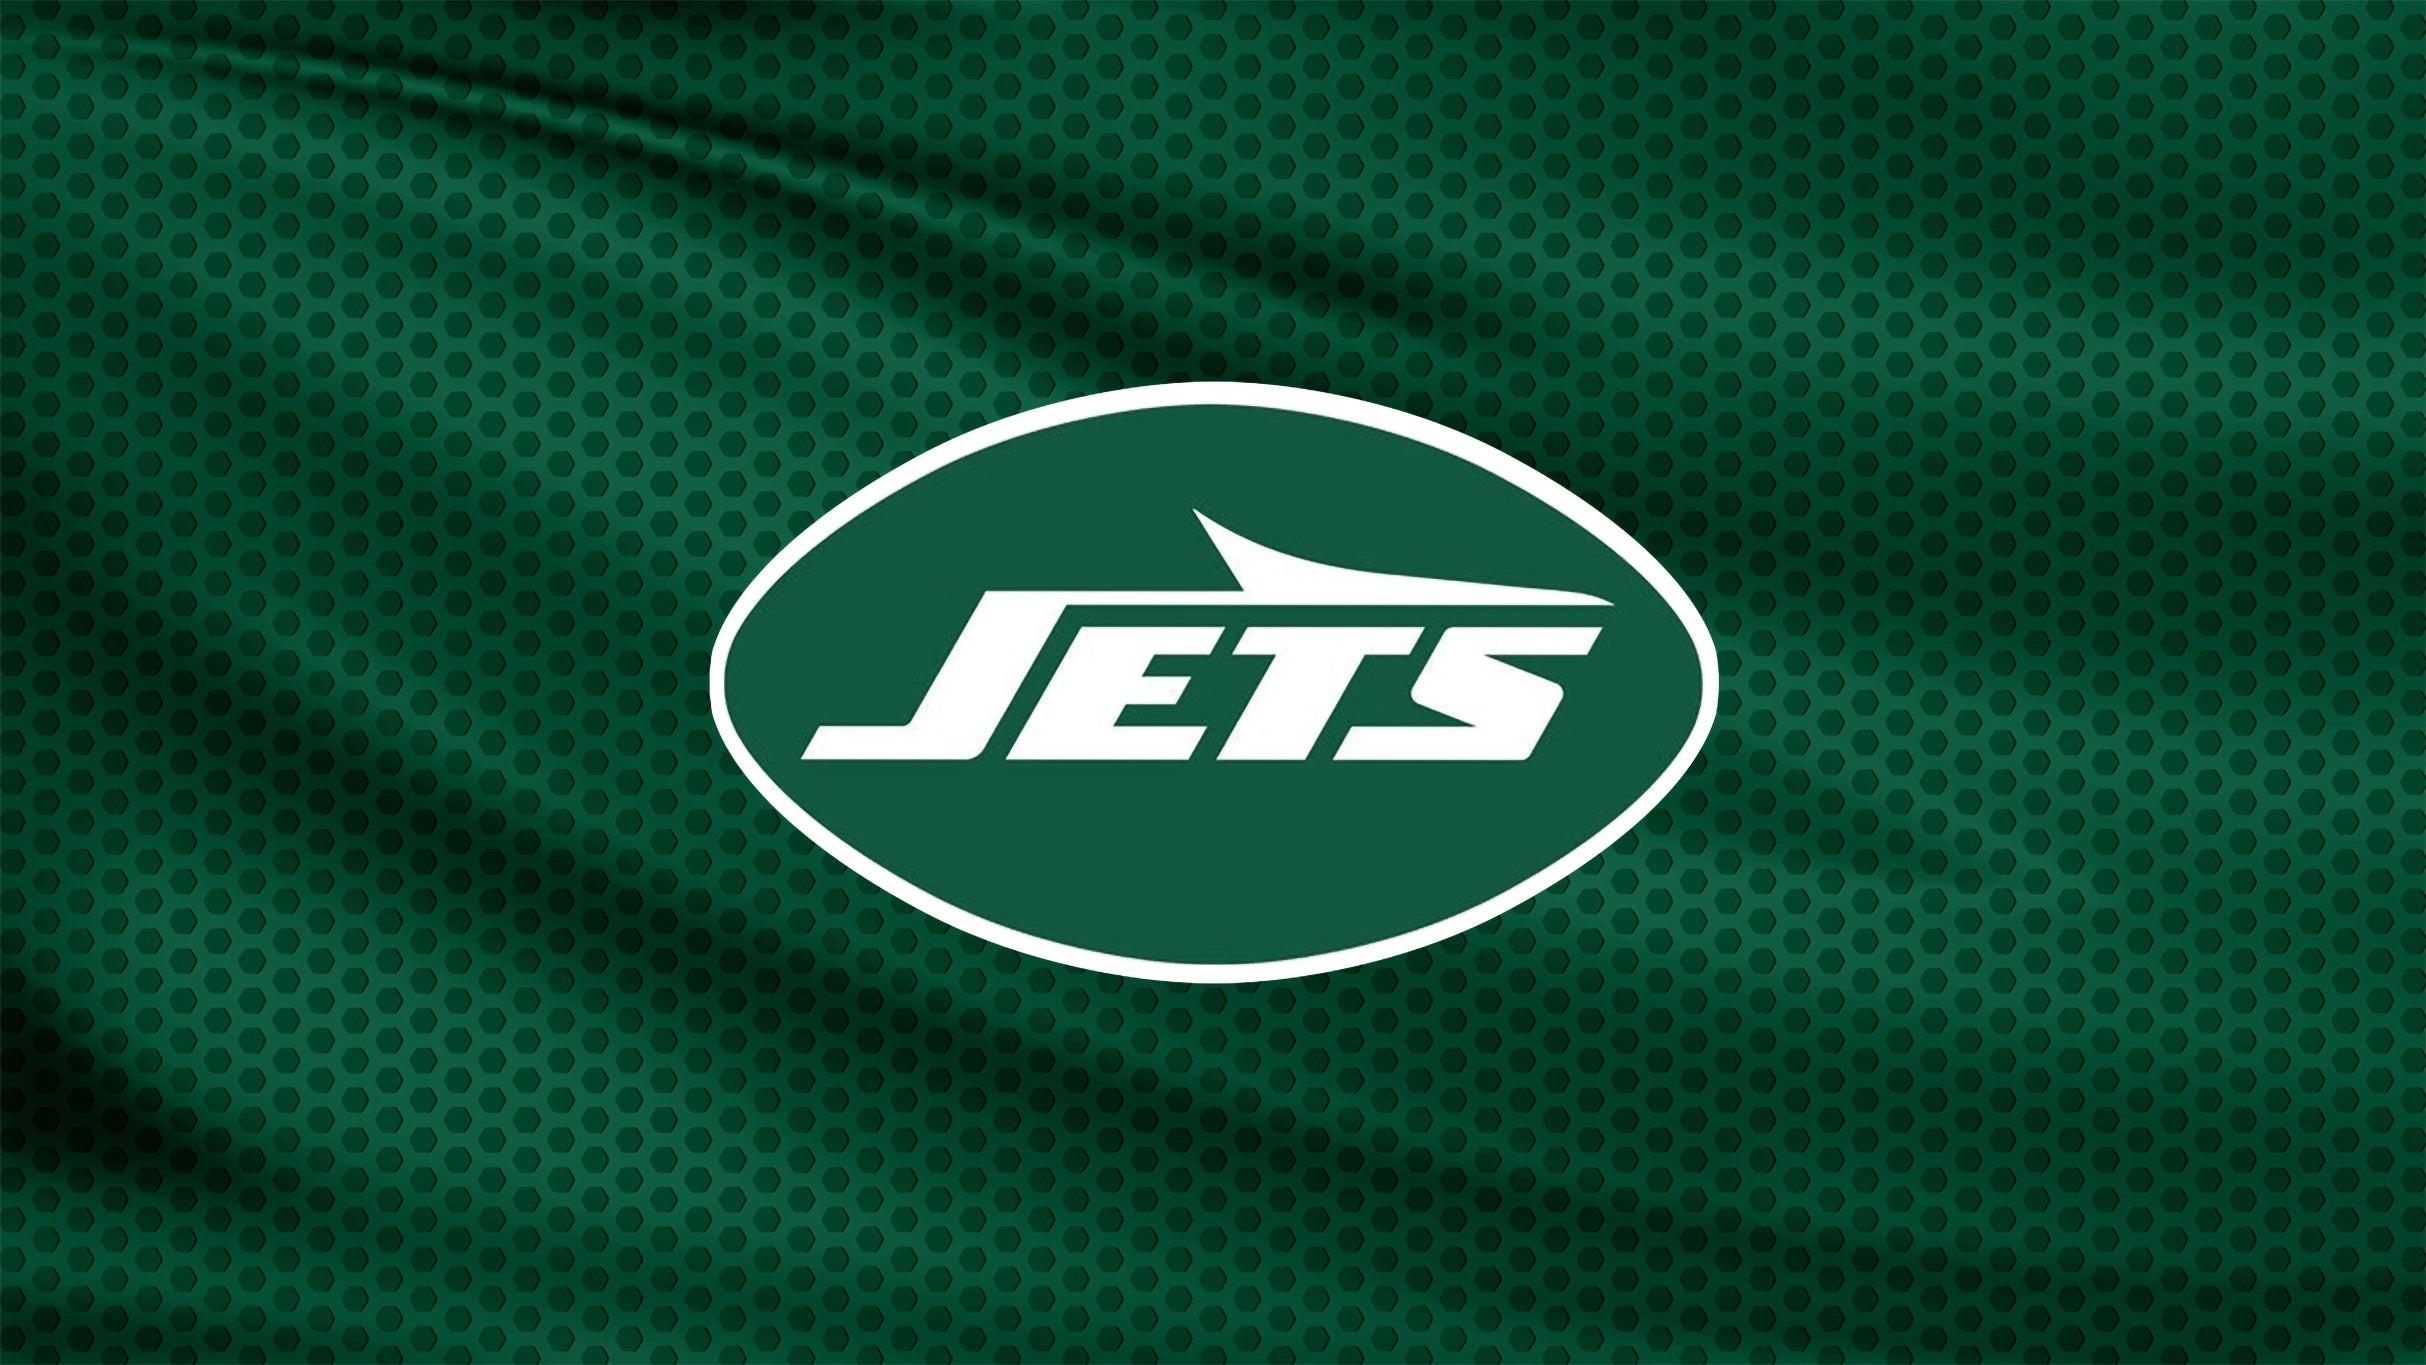 New York Jets vs. Buffalo Bills in East Rutherford promo photo for VISA presale offer code